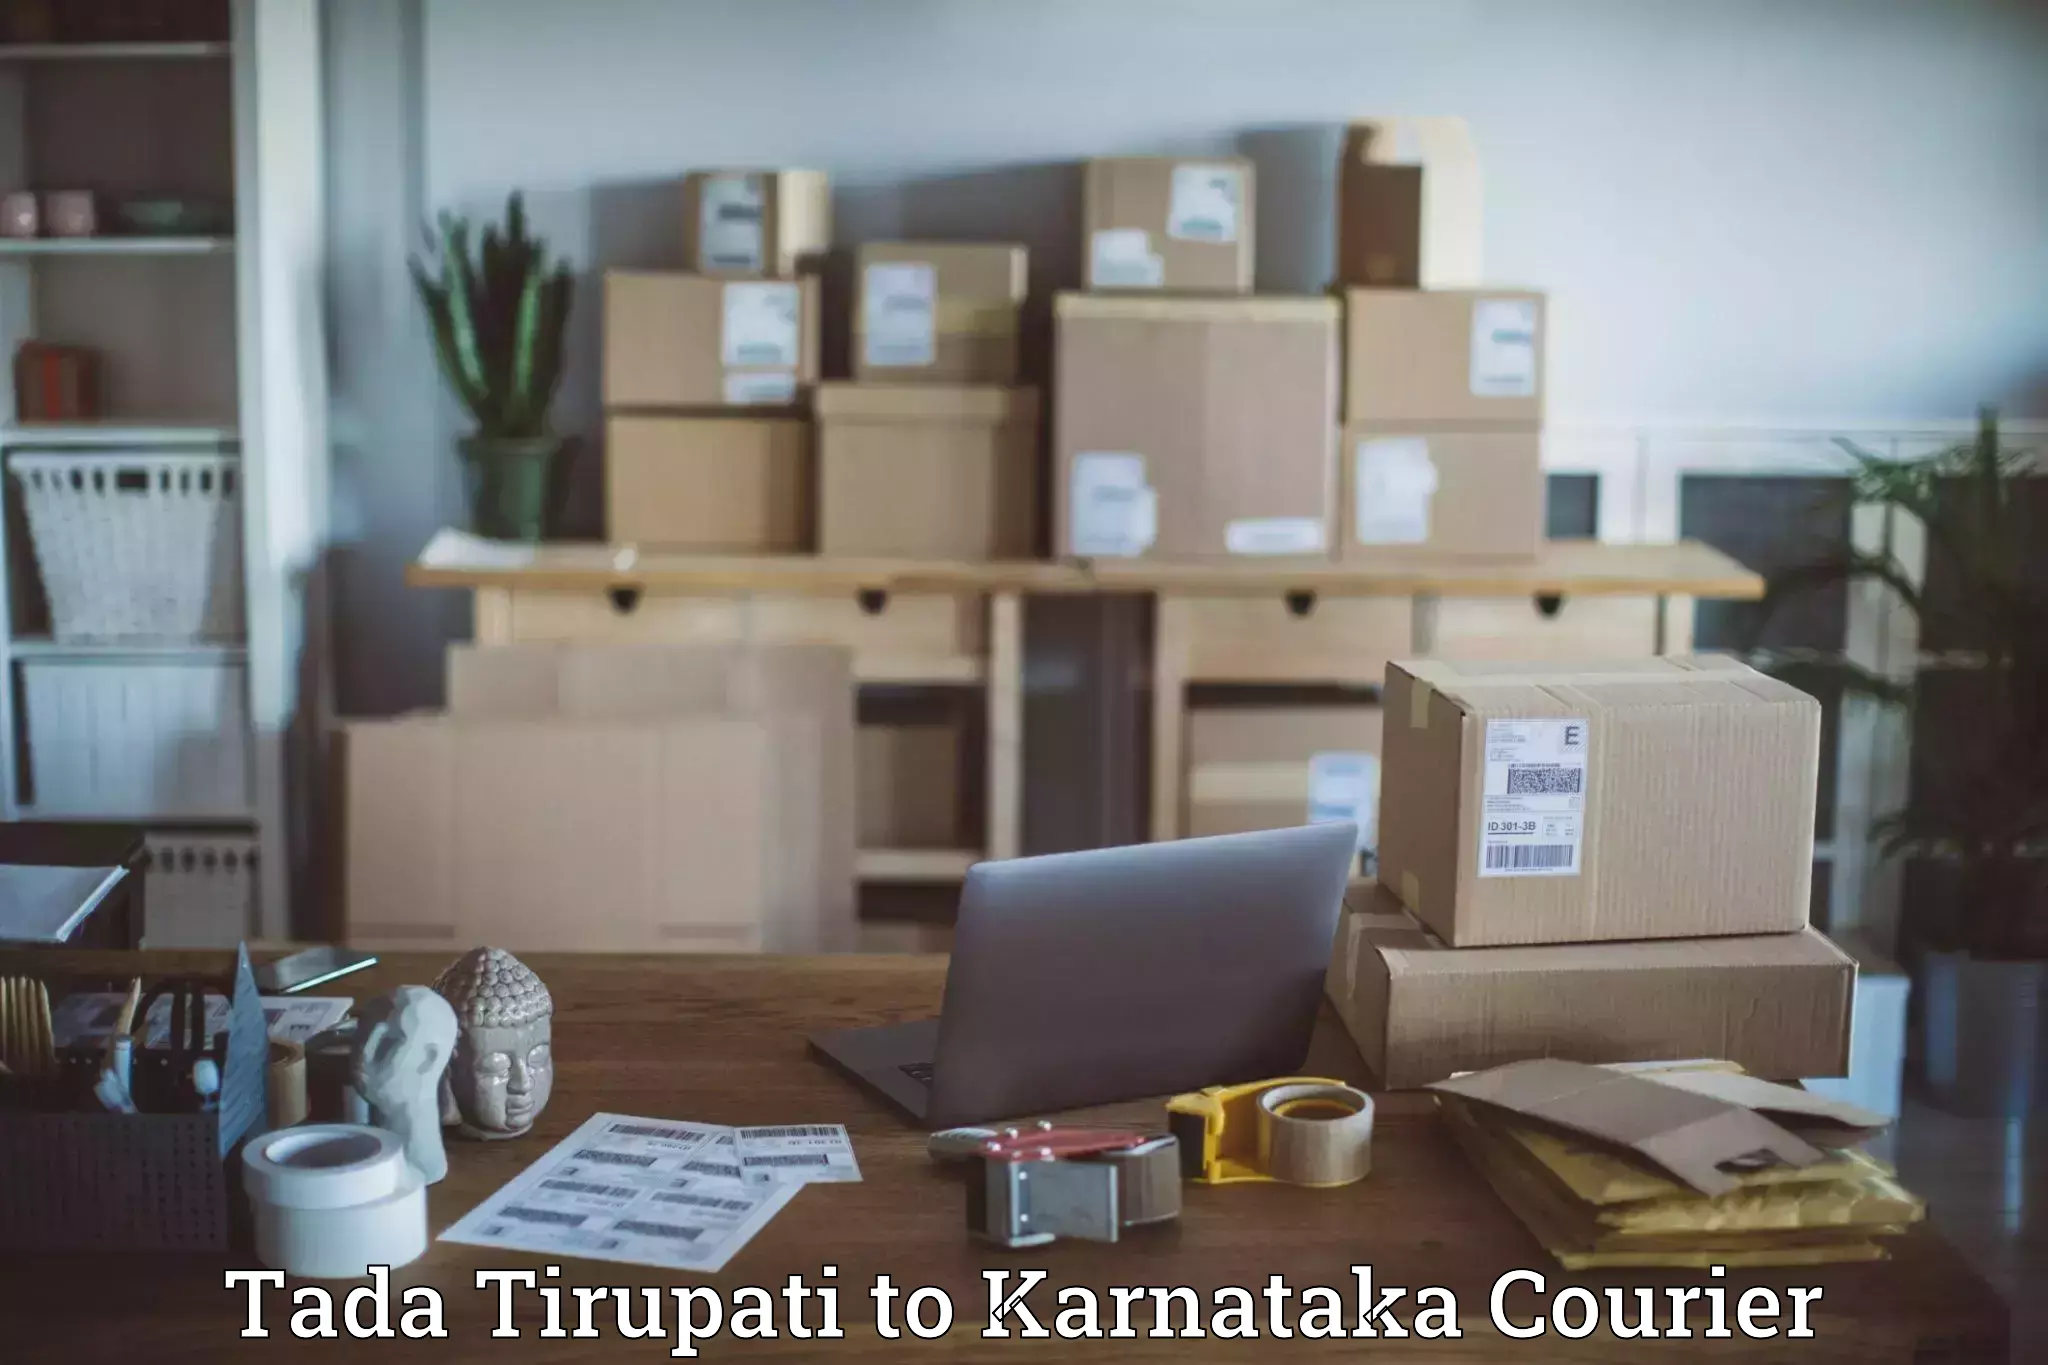 Customer-centric shipping Tada Tirupati to Mysore